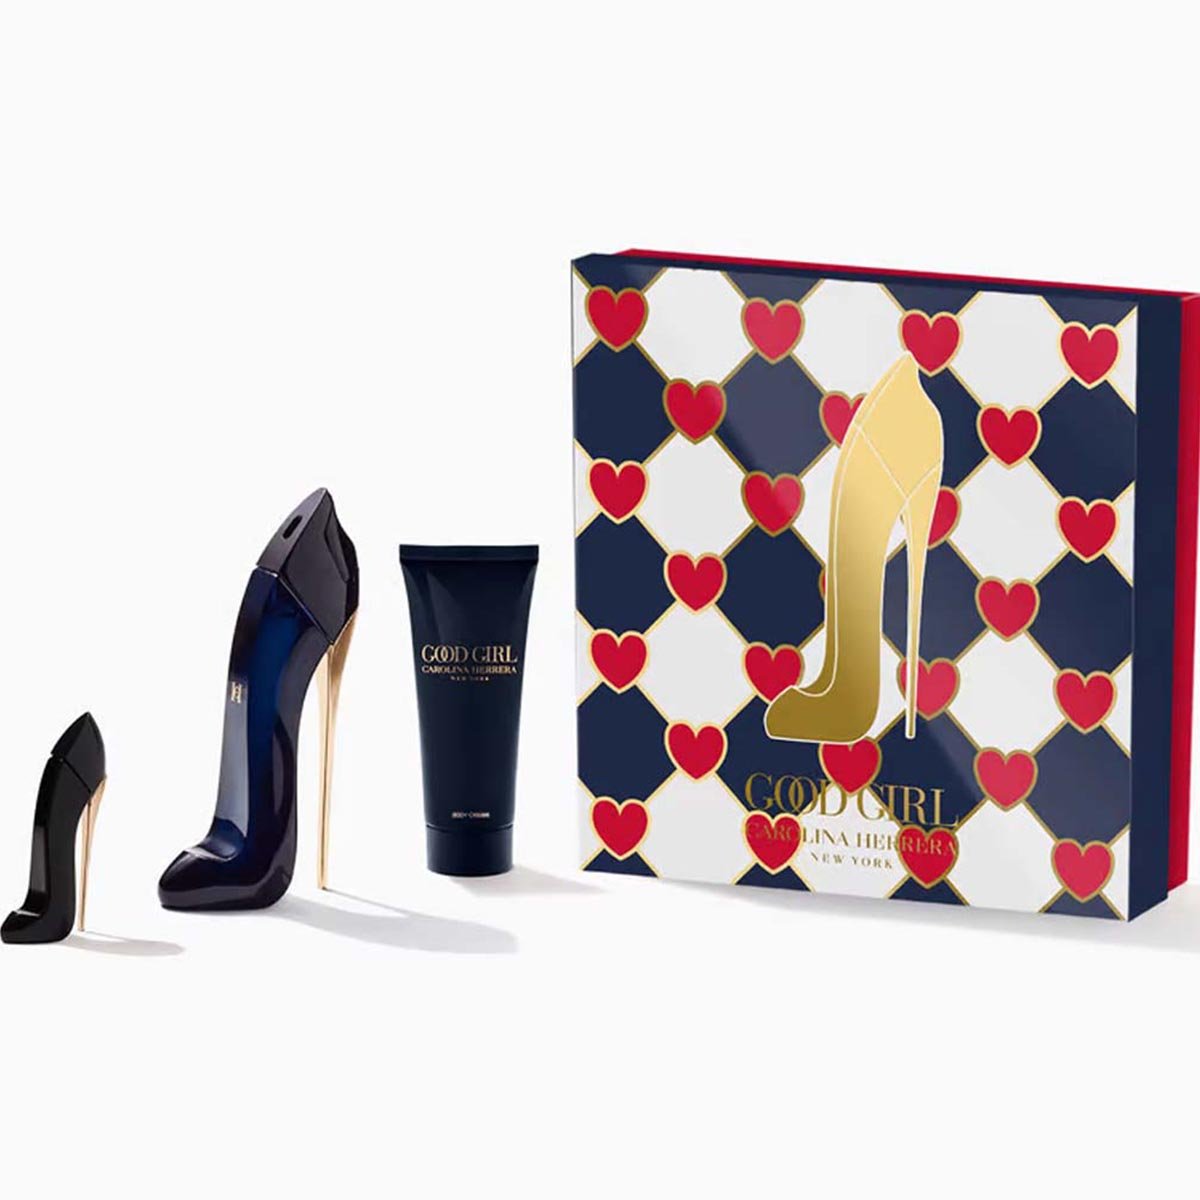 Carolina Herrera Good Girl Lotion & Travel Spray Set | My Perfume Shop Australia